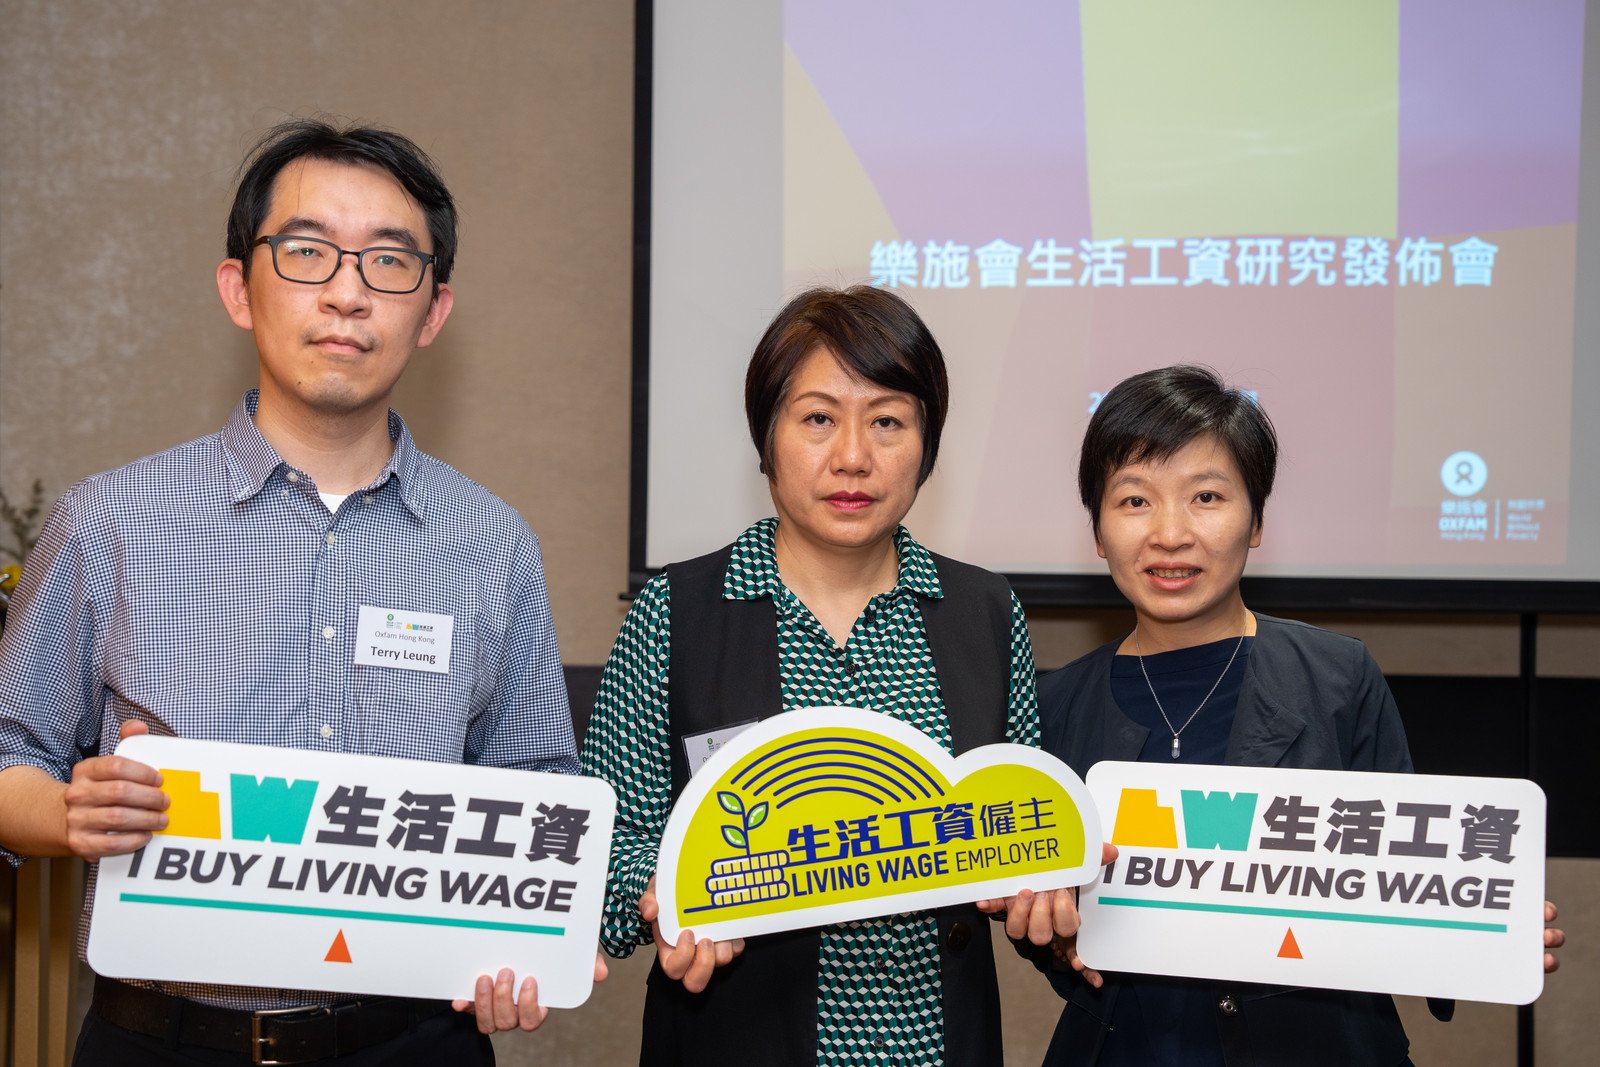 From the left:  • Terry Leung Ming-fung, Assistant Research and Advocacy Manager, Oxfam Hong Kong  • Kalina Tsang Ka-wai, Director General, Oxfam Hong Kong  • Wong Shek-Hung, Director of Hong Kong, Macau, Taiwan Programme, Oxfam Hong Kong